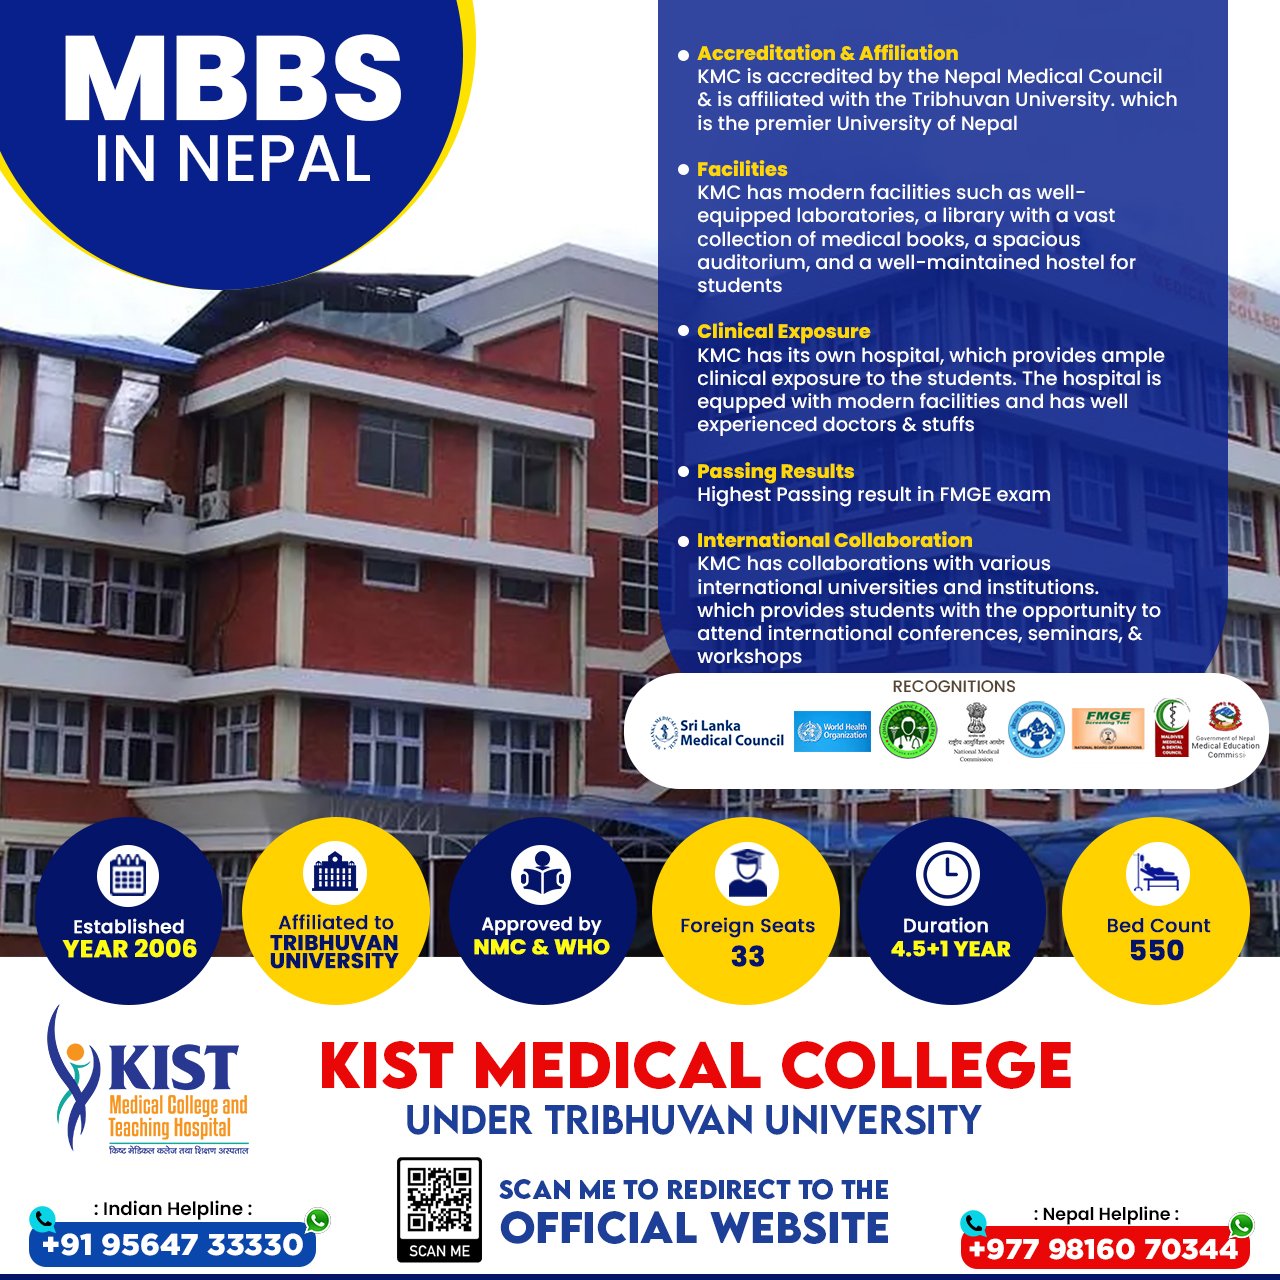 mbbs-in-nepal-at-kist-medical-college-under-tribhuvan-university